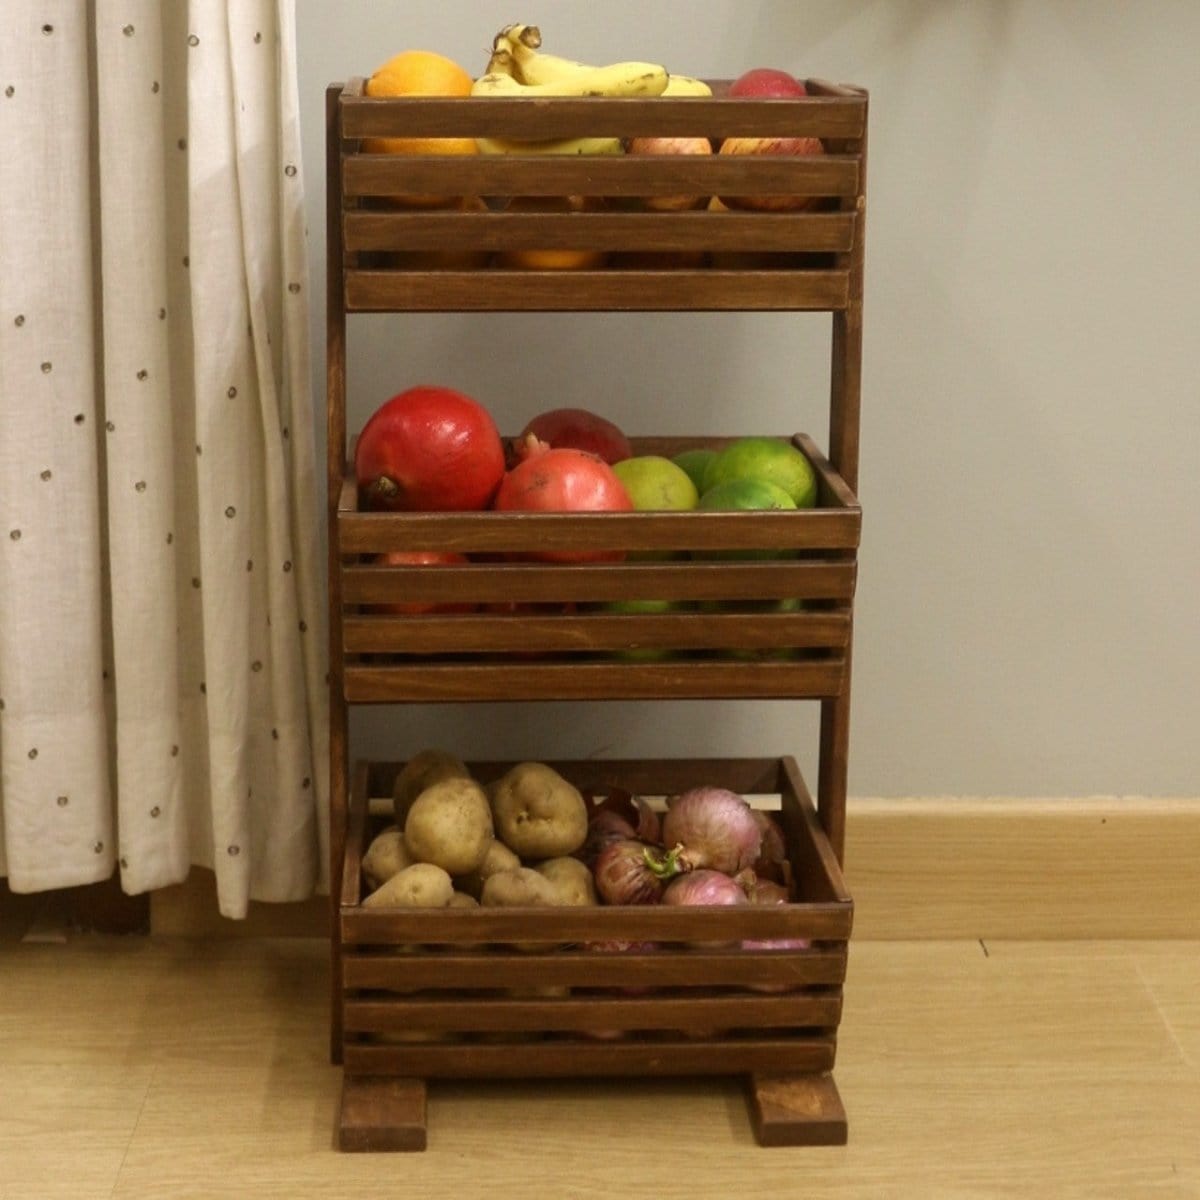 Barish Veg & Fruit Basket (3 Tier) Best Home Decor Handcrafted